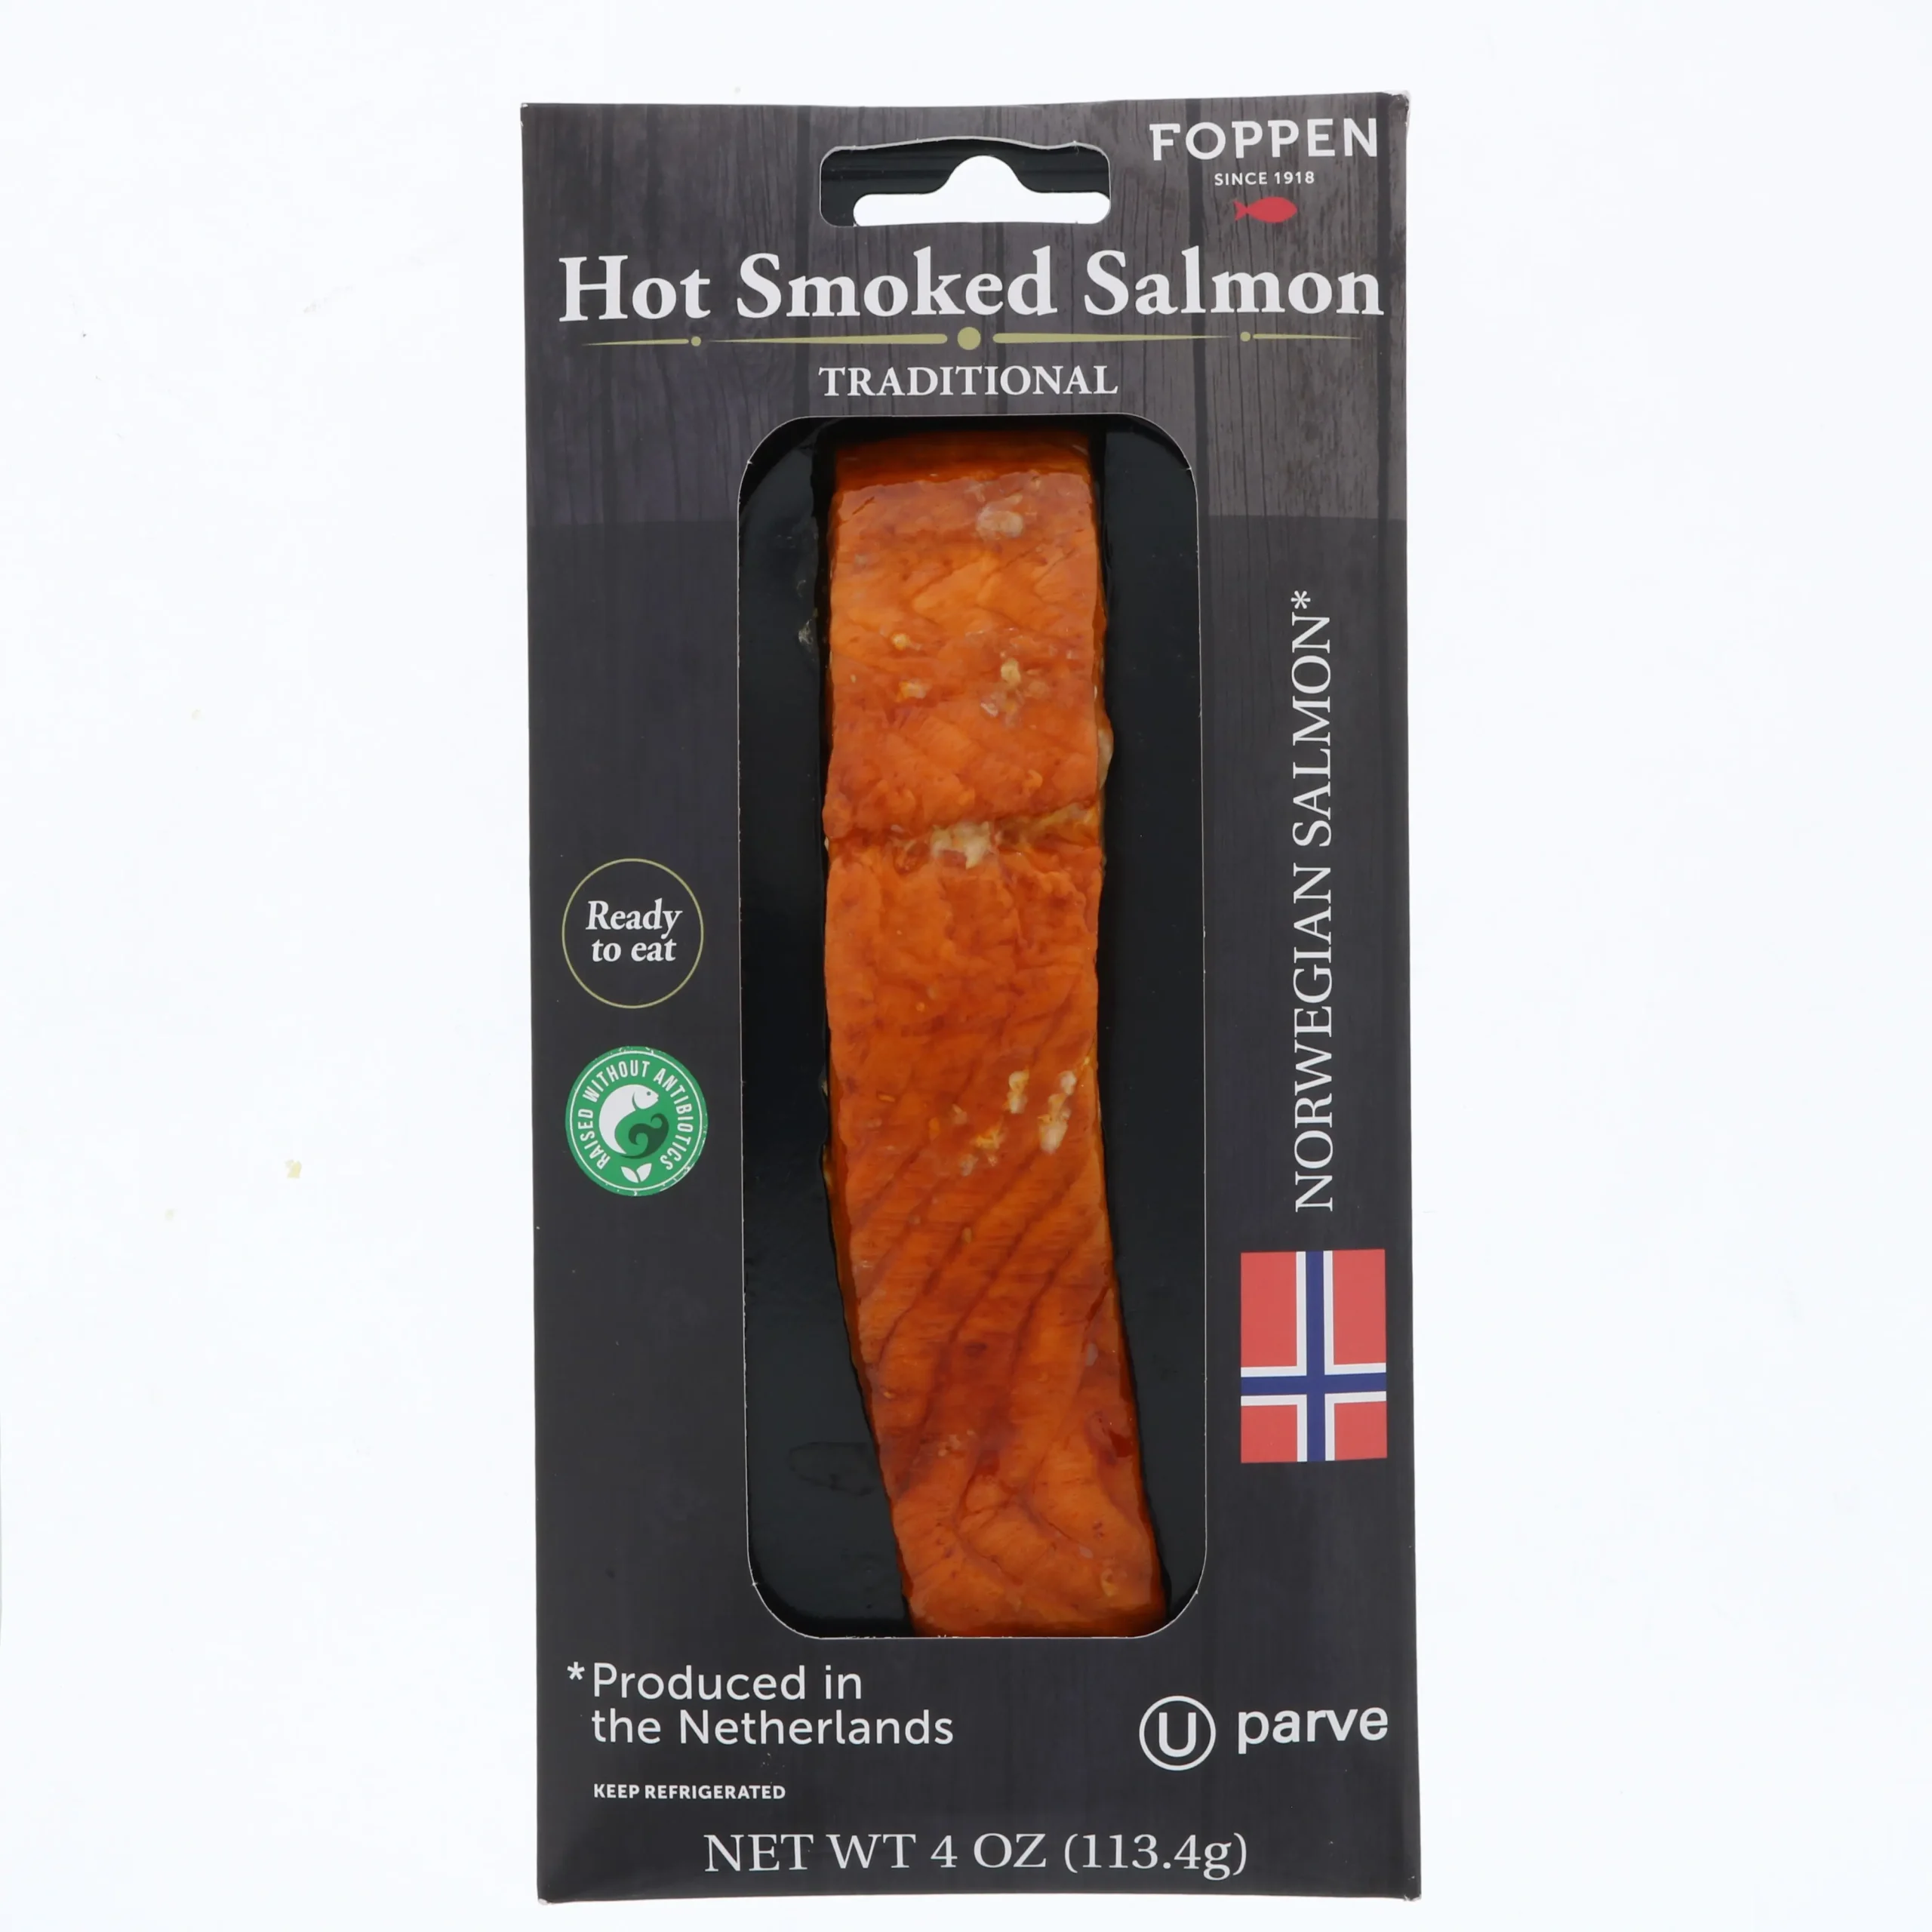 buy hot smoked salmon - Can you buy cooked smoked salmon